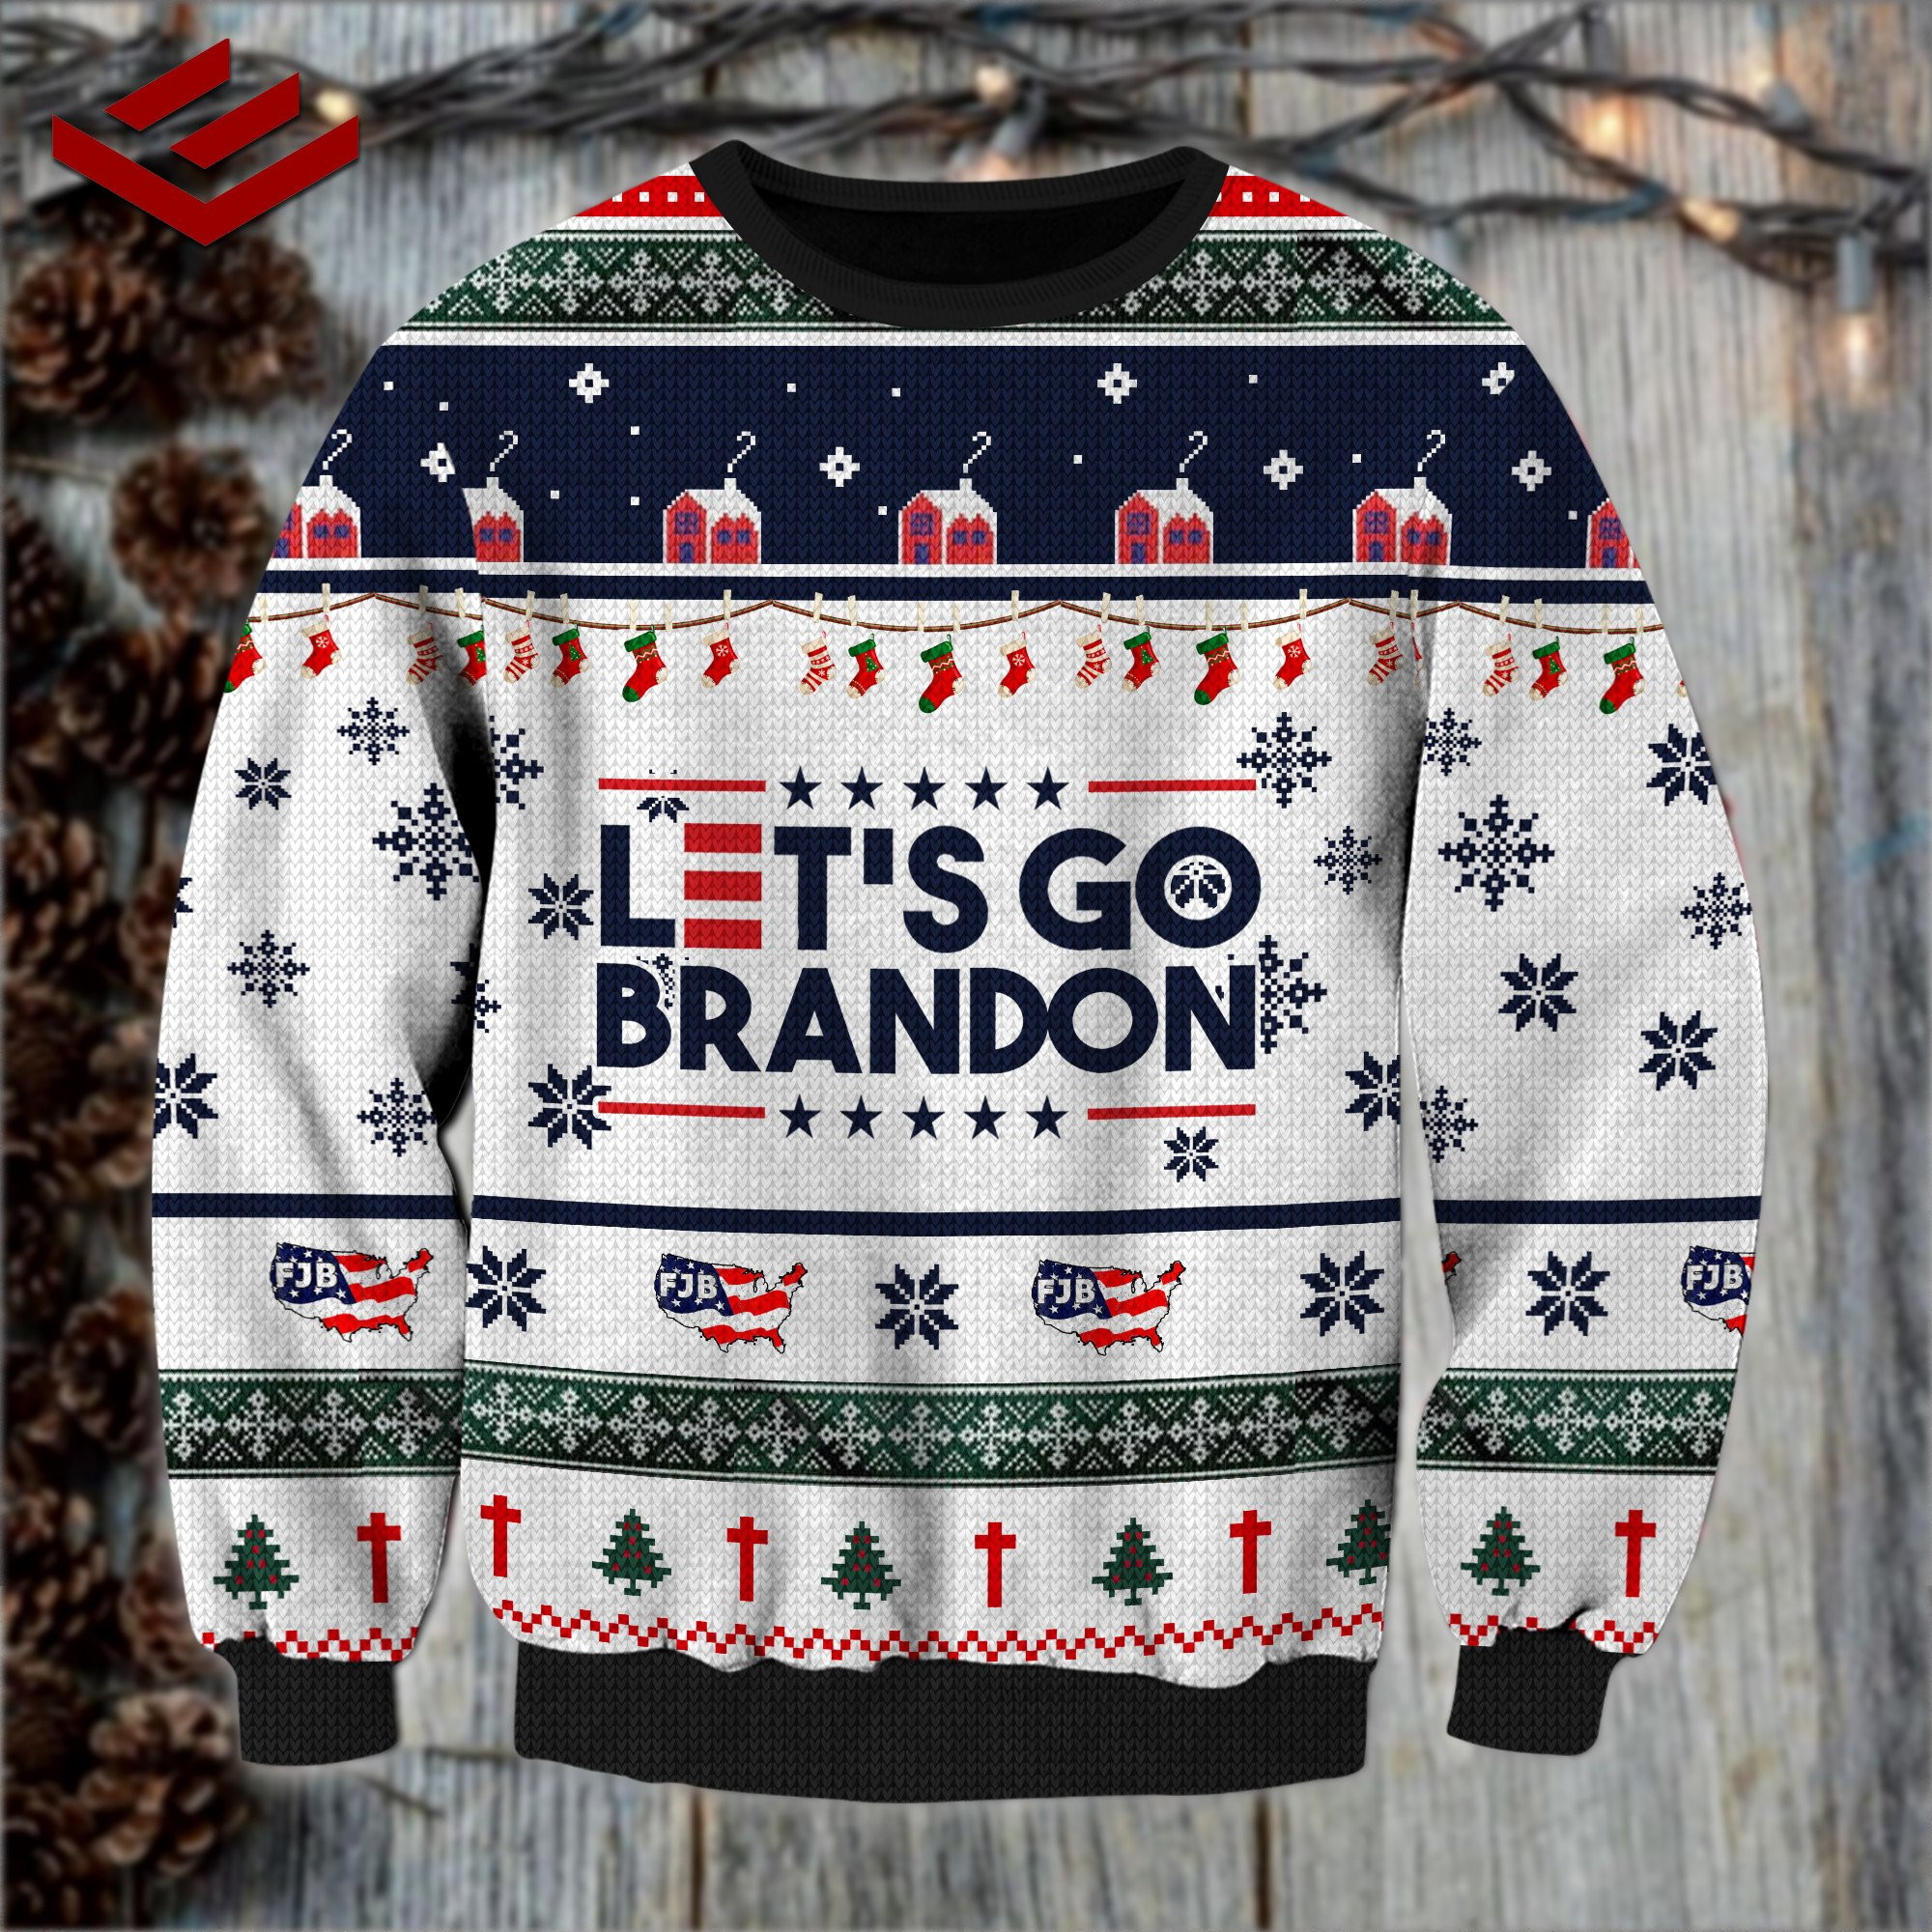 FJB Lets go brandon Printed Ugly Sweater